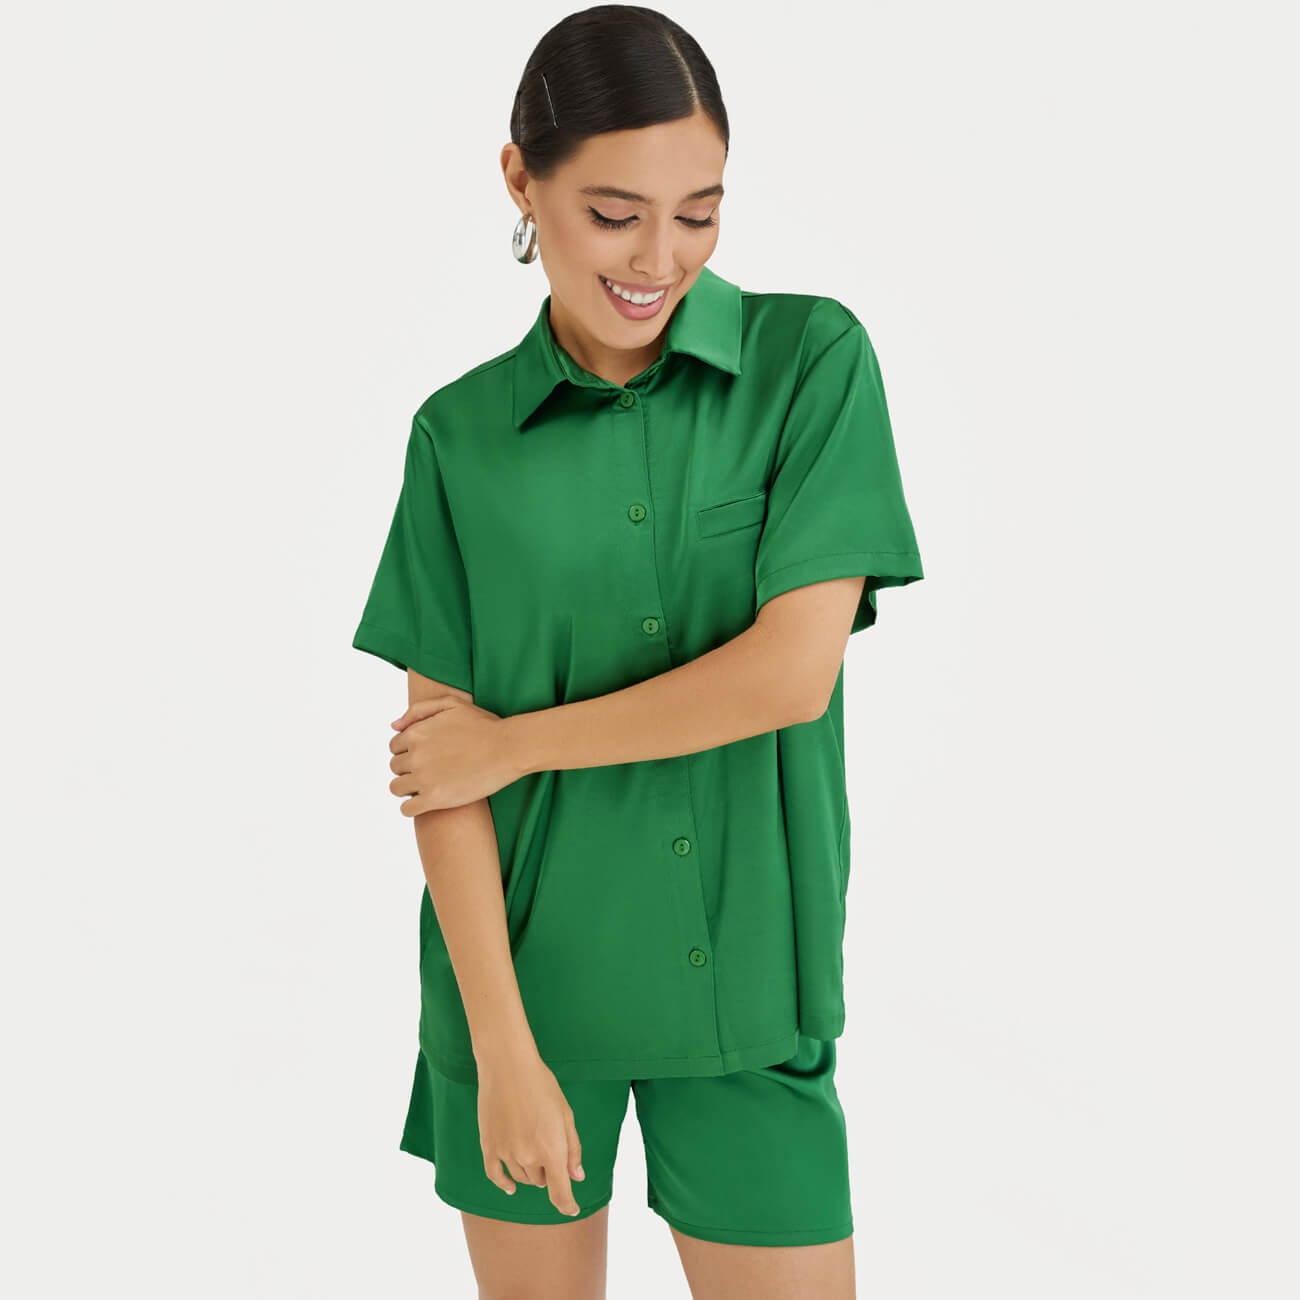 Рубашка женская, р. XL, с коротким рукавом, полиэстер/эластан, зеленая, Madeline рубашка женская р xl с коротким рукавом полиэстер эластан зеленая madeline